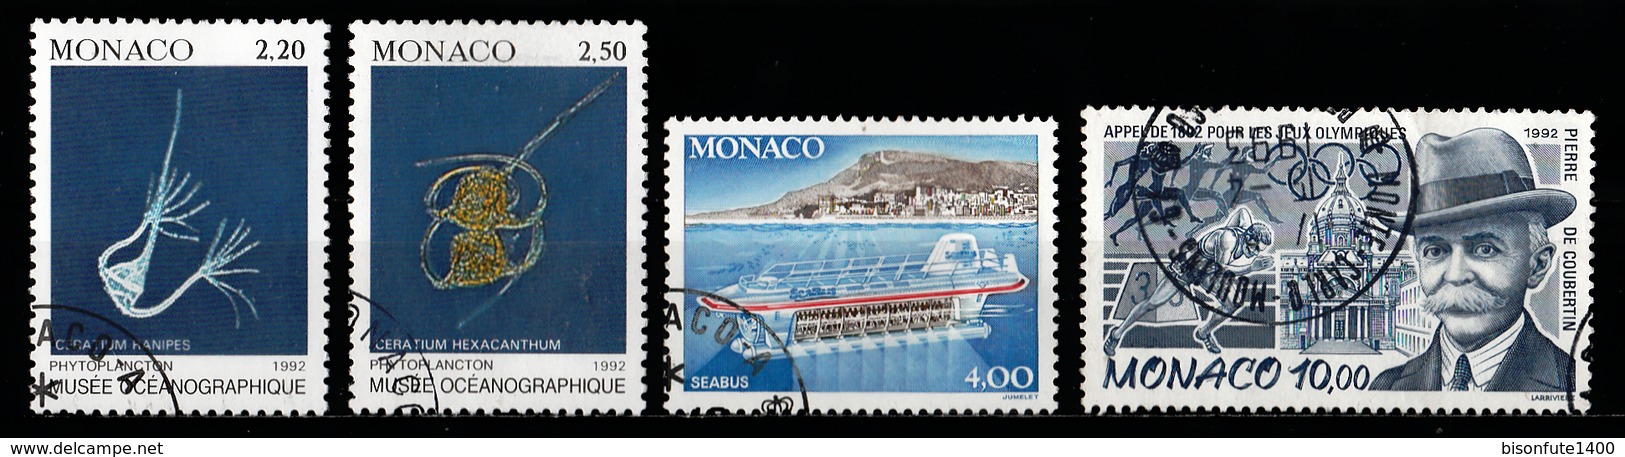 Monaco 1992 : Timbres Yvert & Tellier N° 1846 - 1847 - 1848 - 1849 - 1850 - 1851 - 1852 Et 1853. - Usados